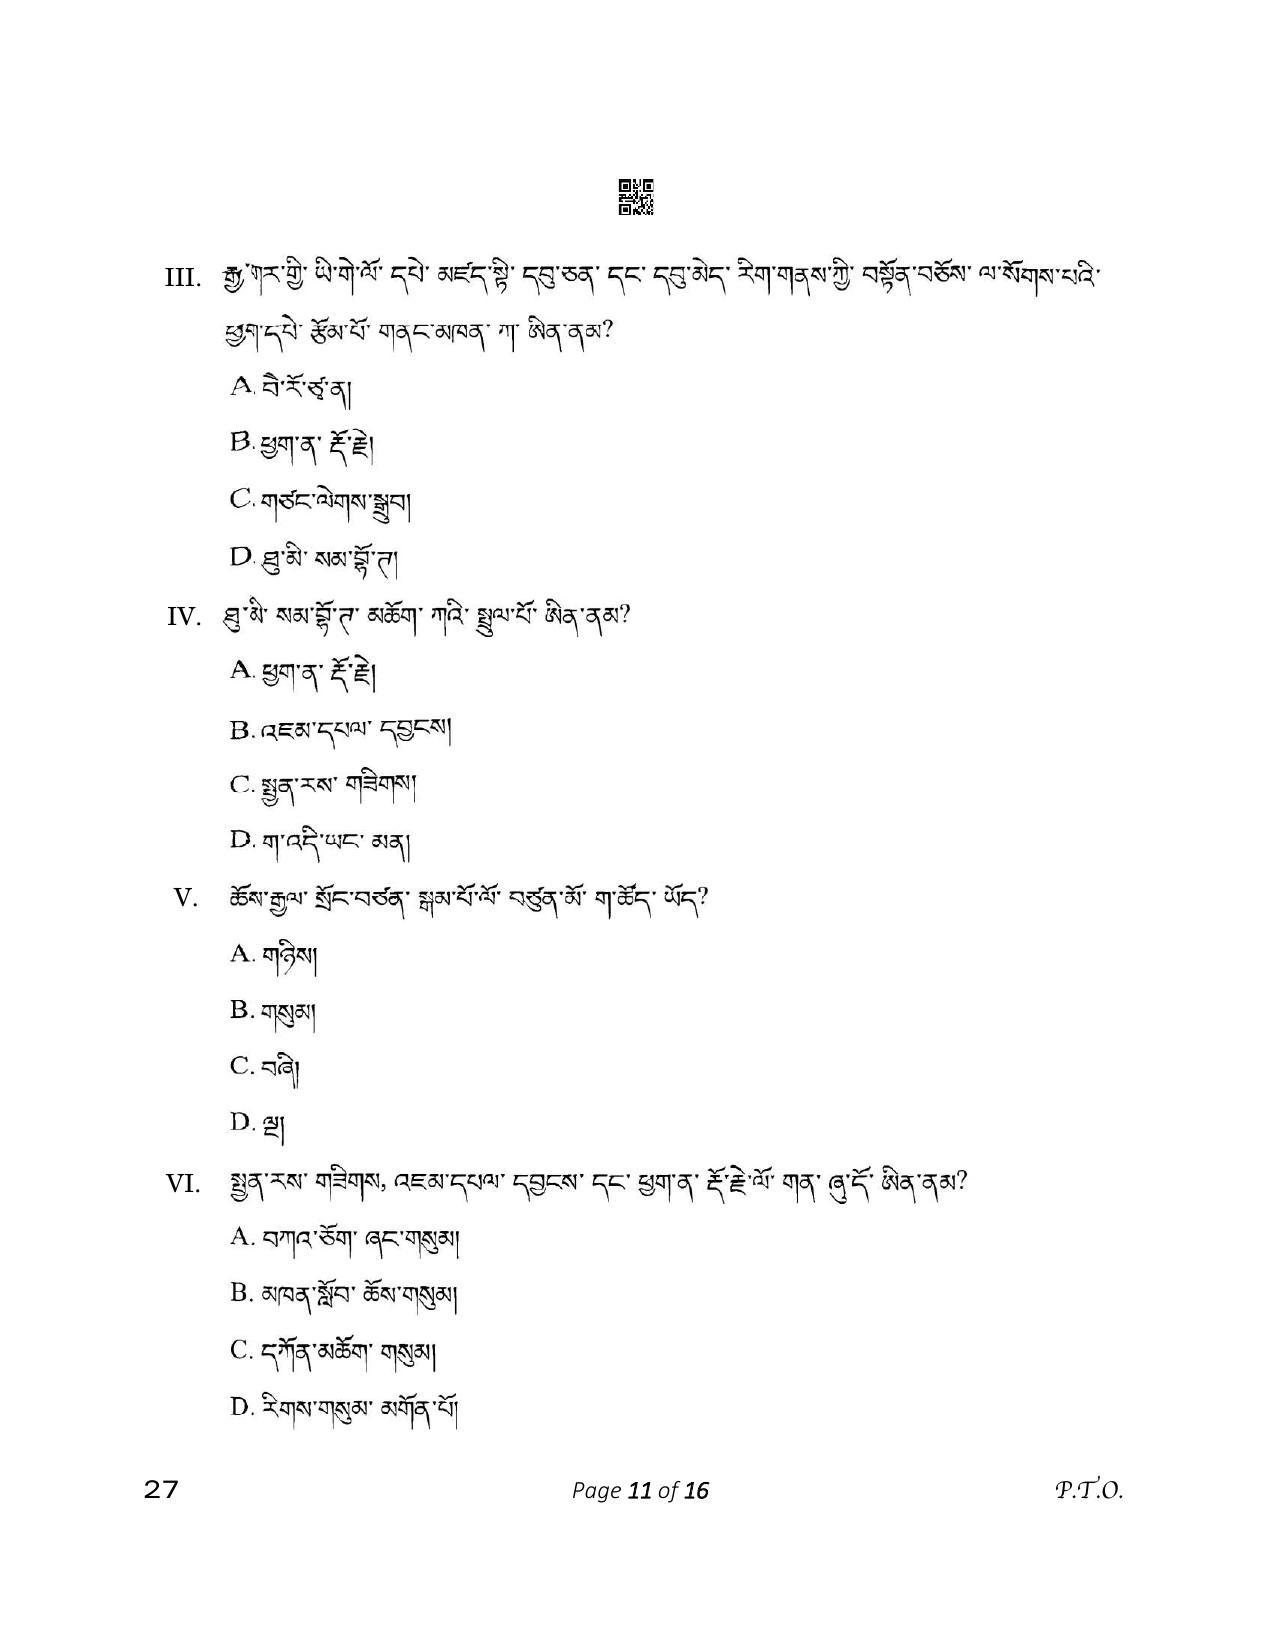 CBSE Class 12 27_Bhutia 2023 2023 Question Paper - Page 11